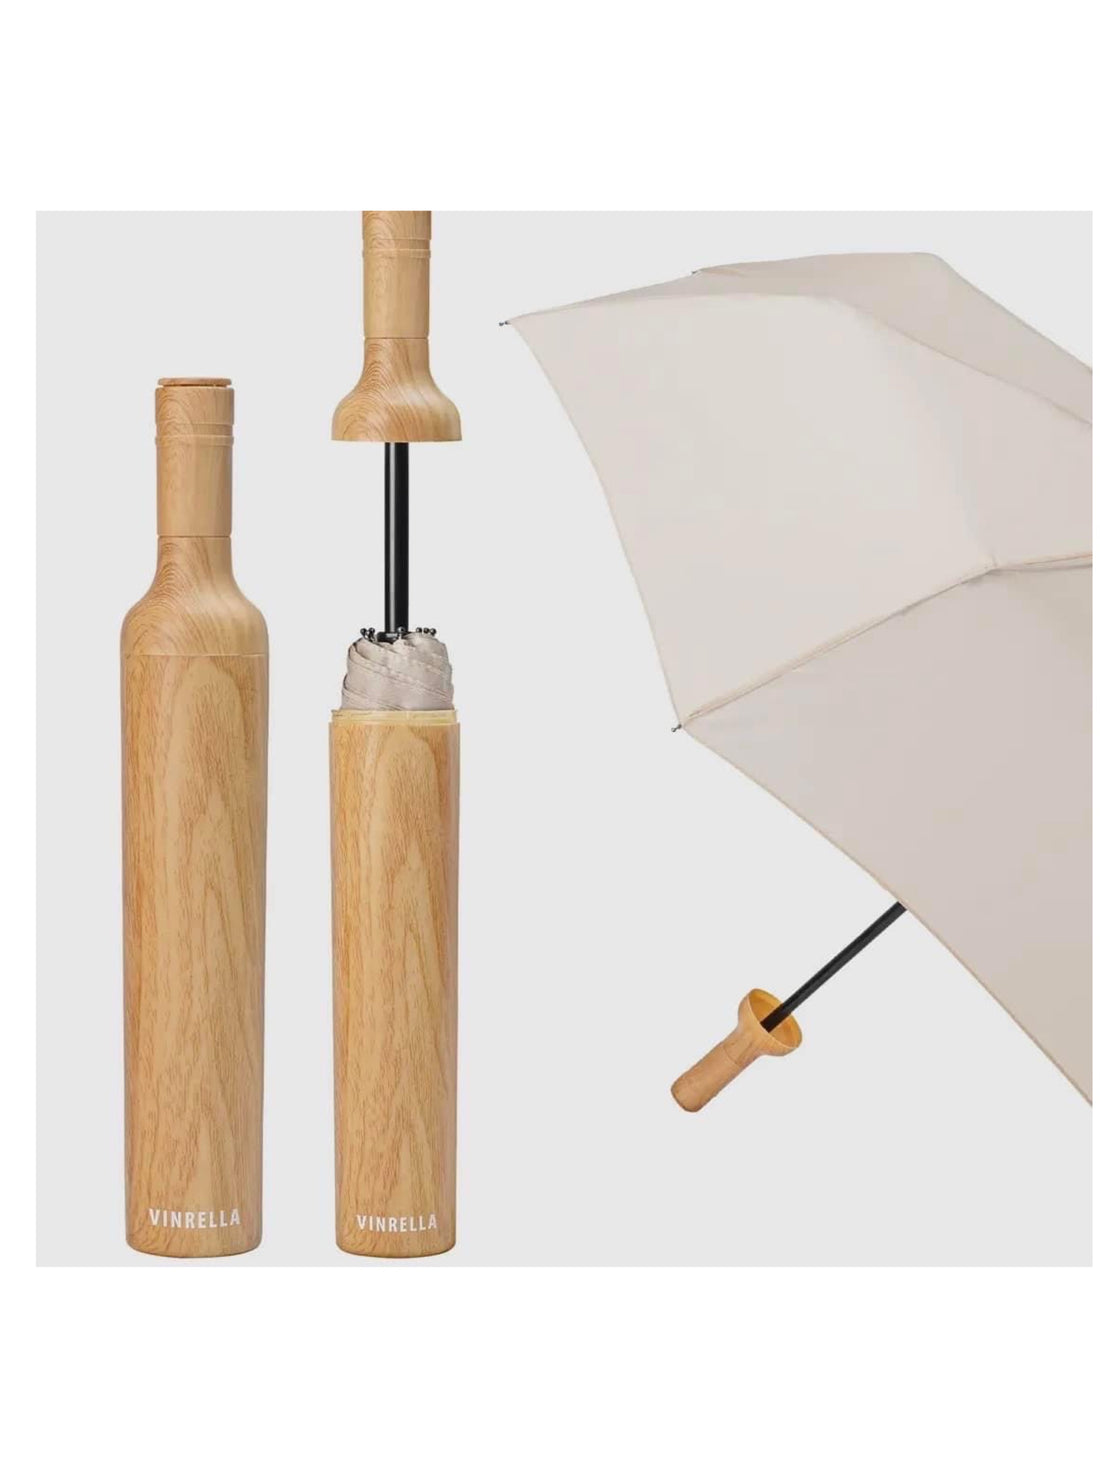 Umbrella in a Bottle - Wooden Appearance